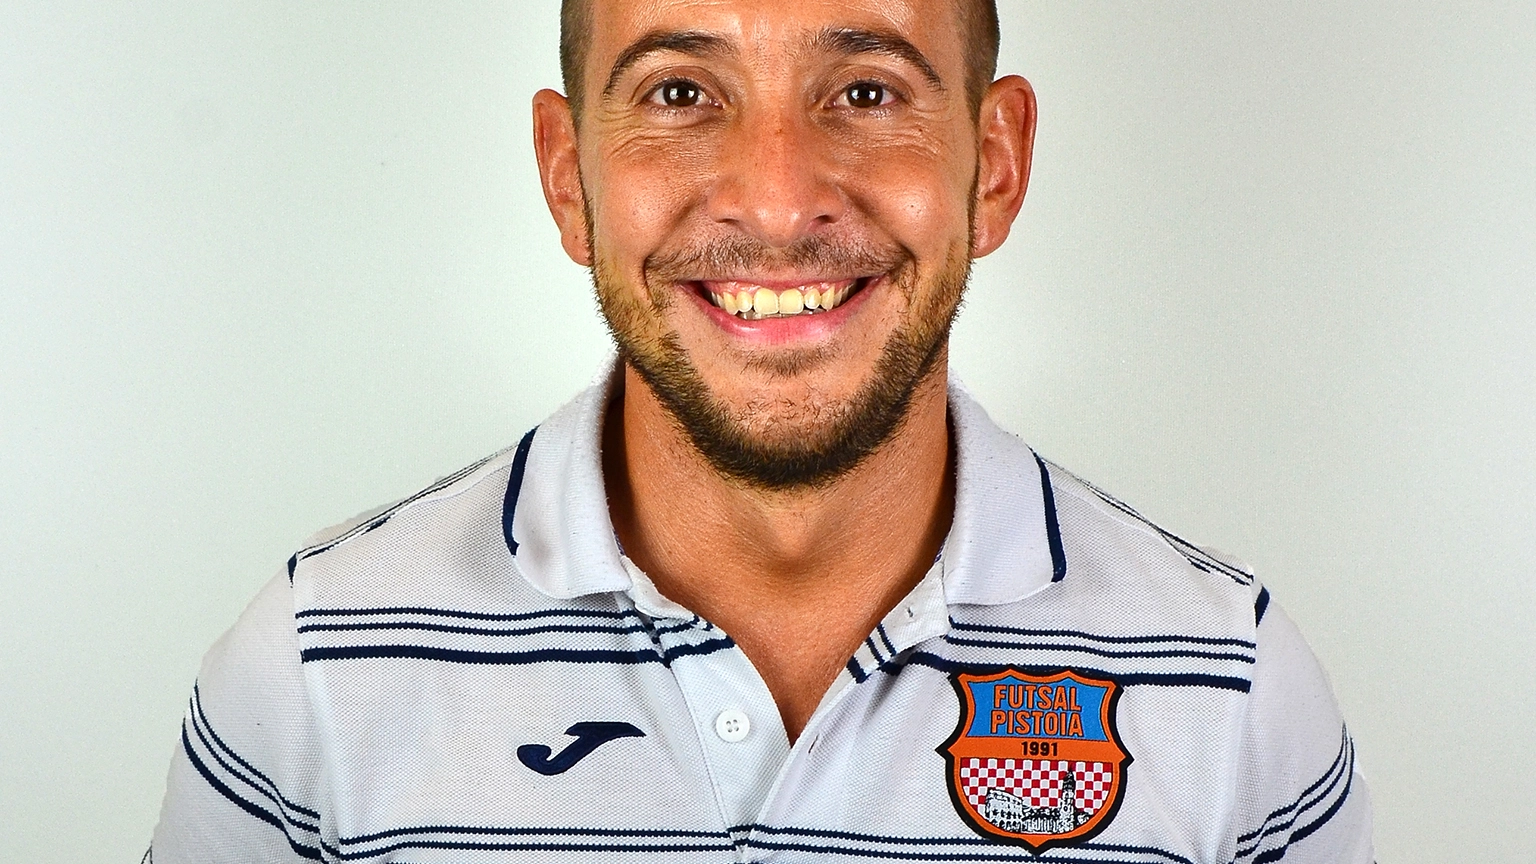 Simone Ragazzini ds Futsal Pistoia